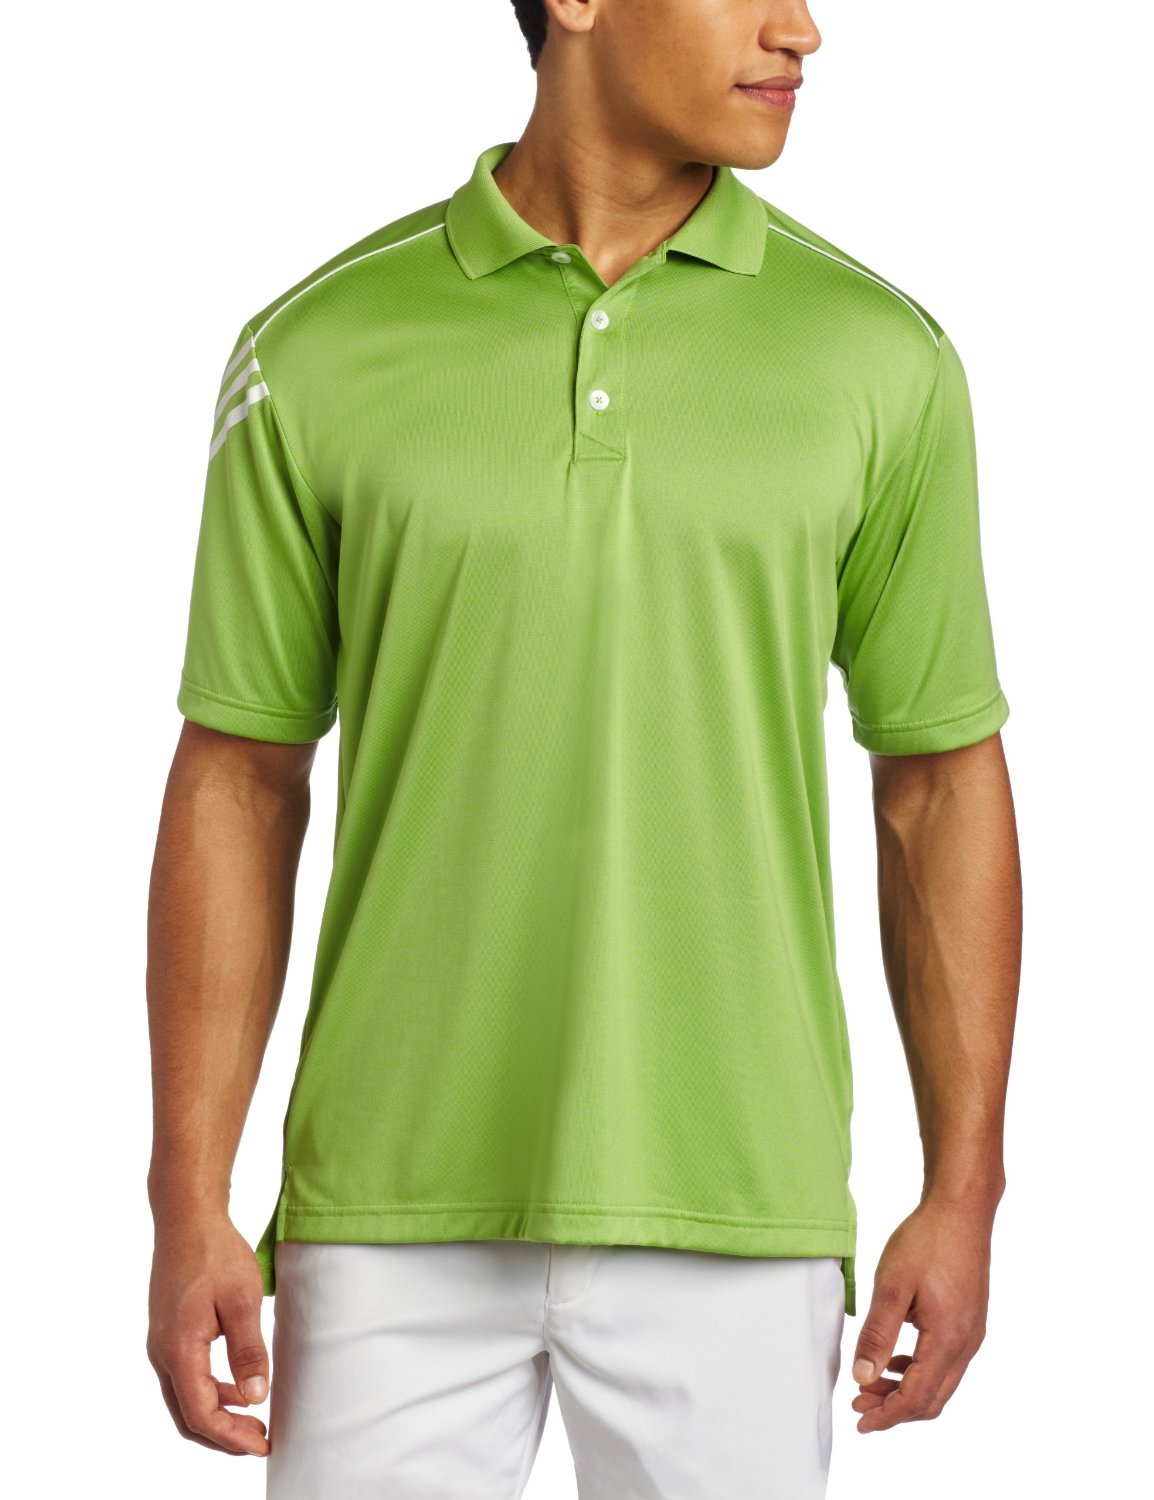 Adidas ClimaCool 3 Stripes Golf Polo Shirts